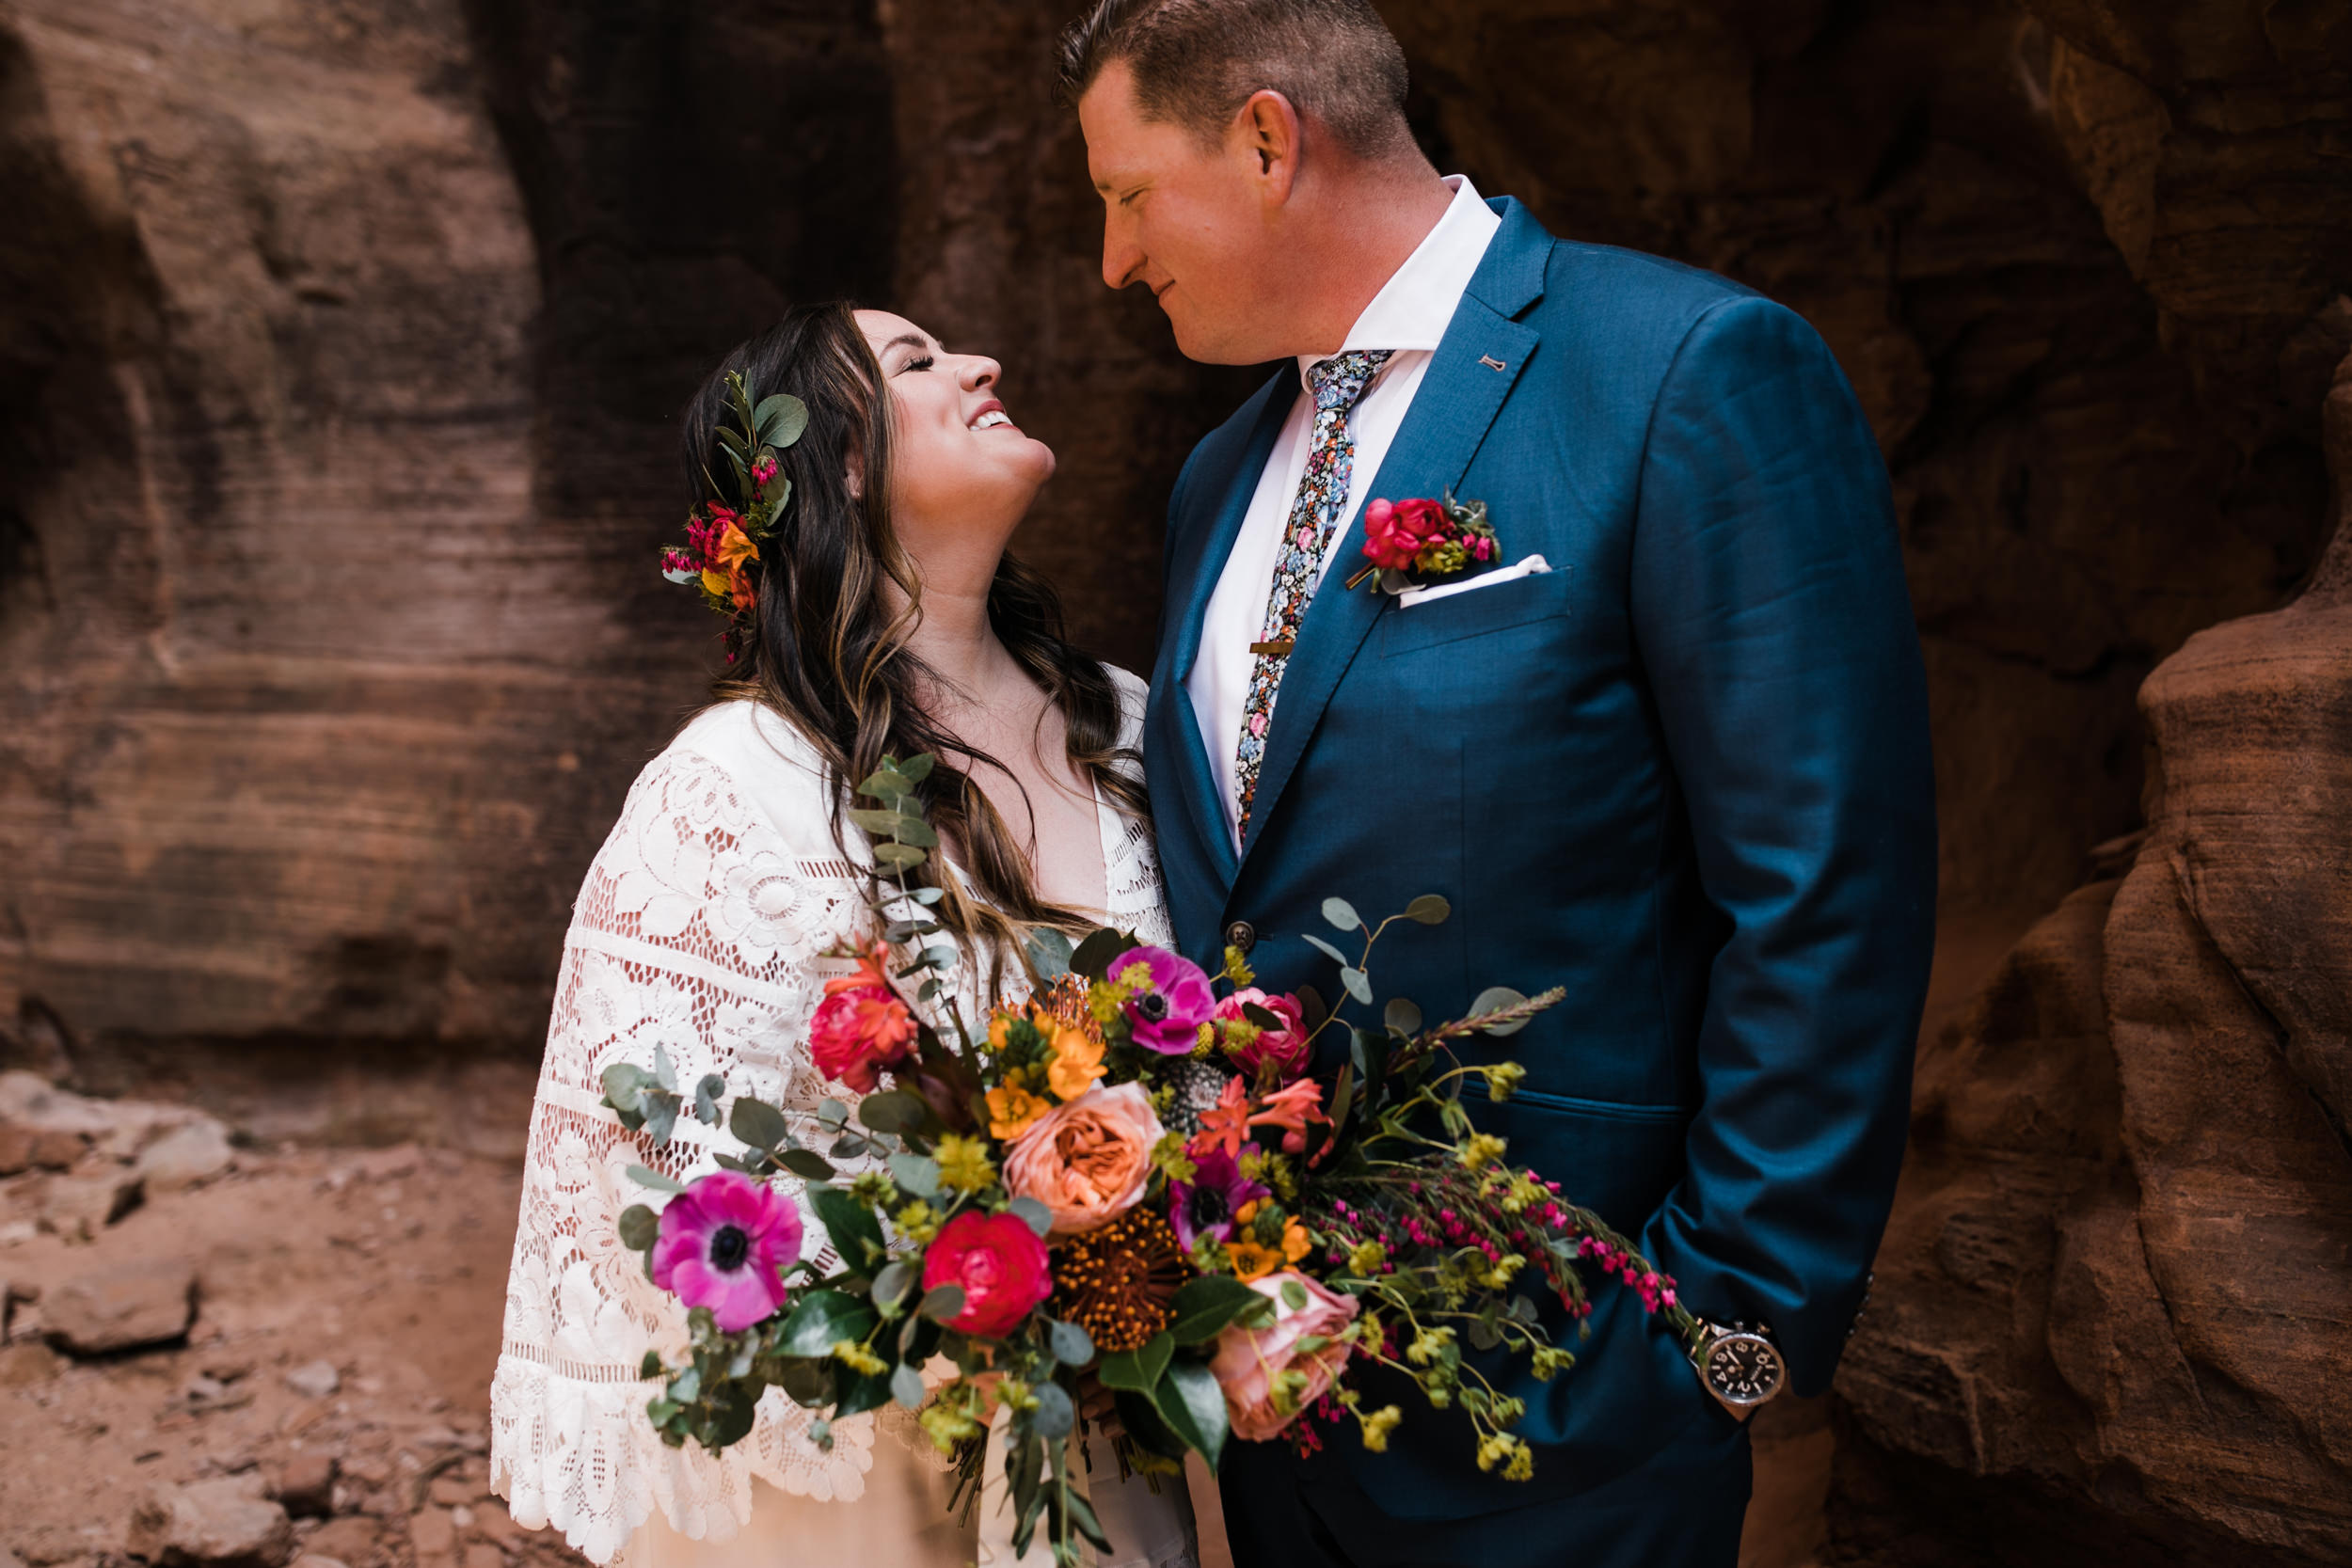 Zion national park elopement photographer | intimate wedding in the desert | alternate wedding ideas | the hearnes adventure photography